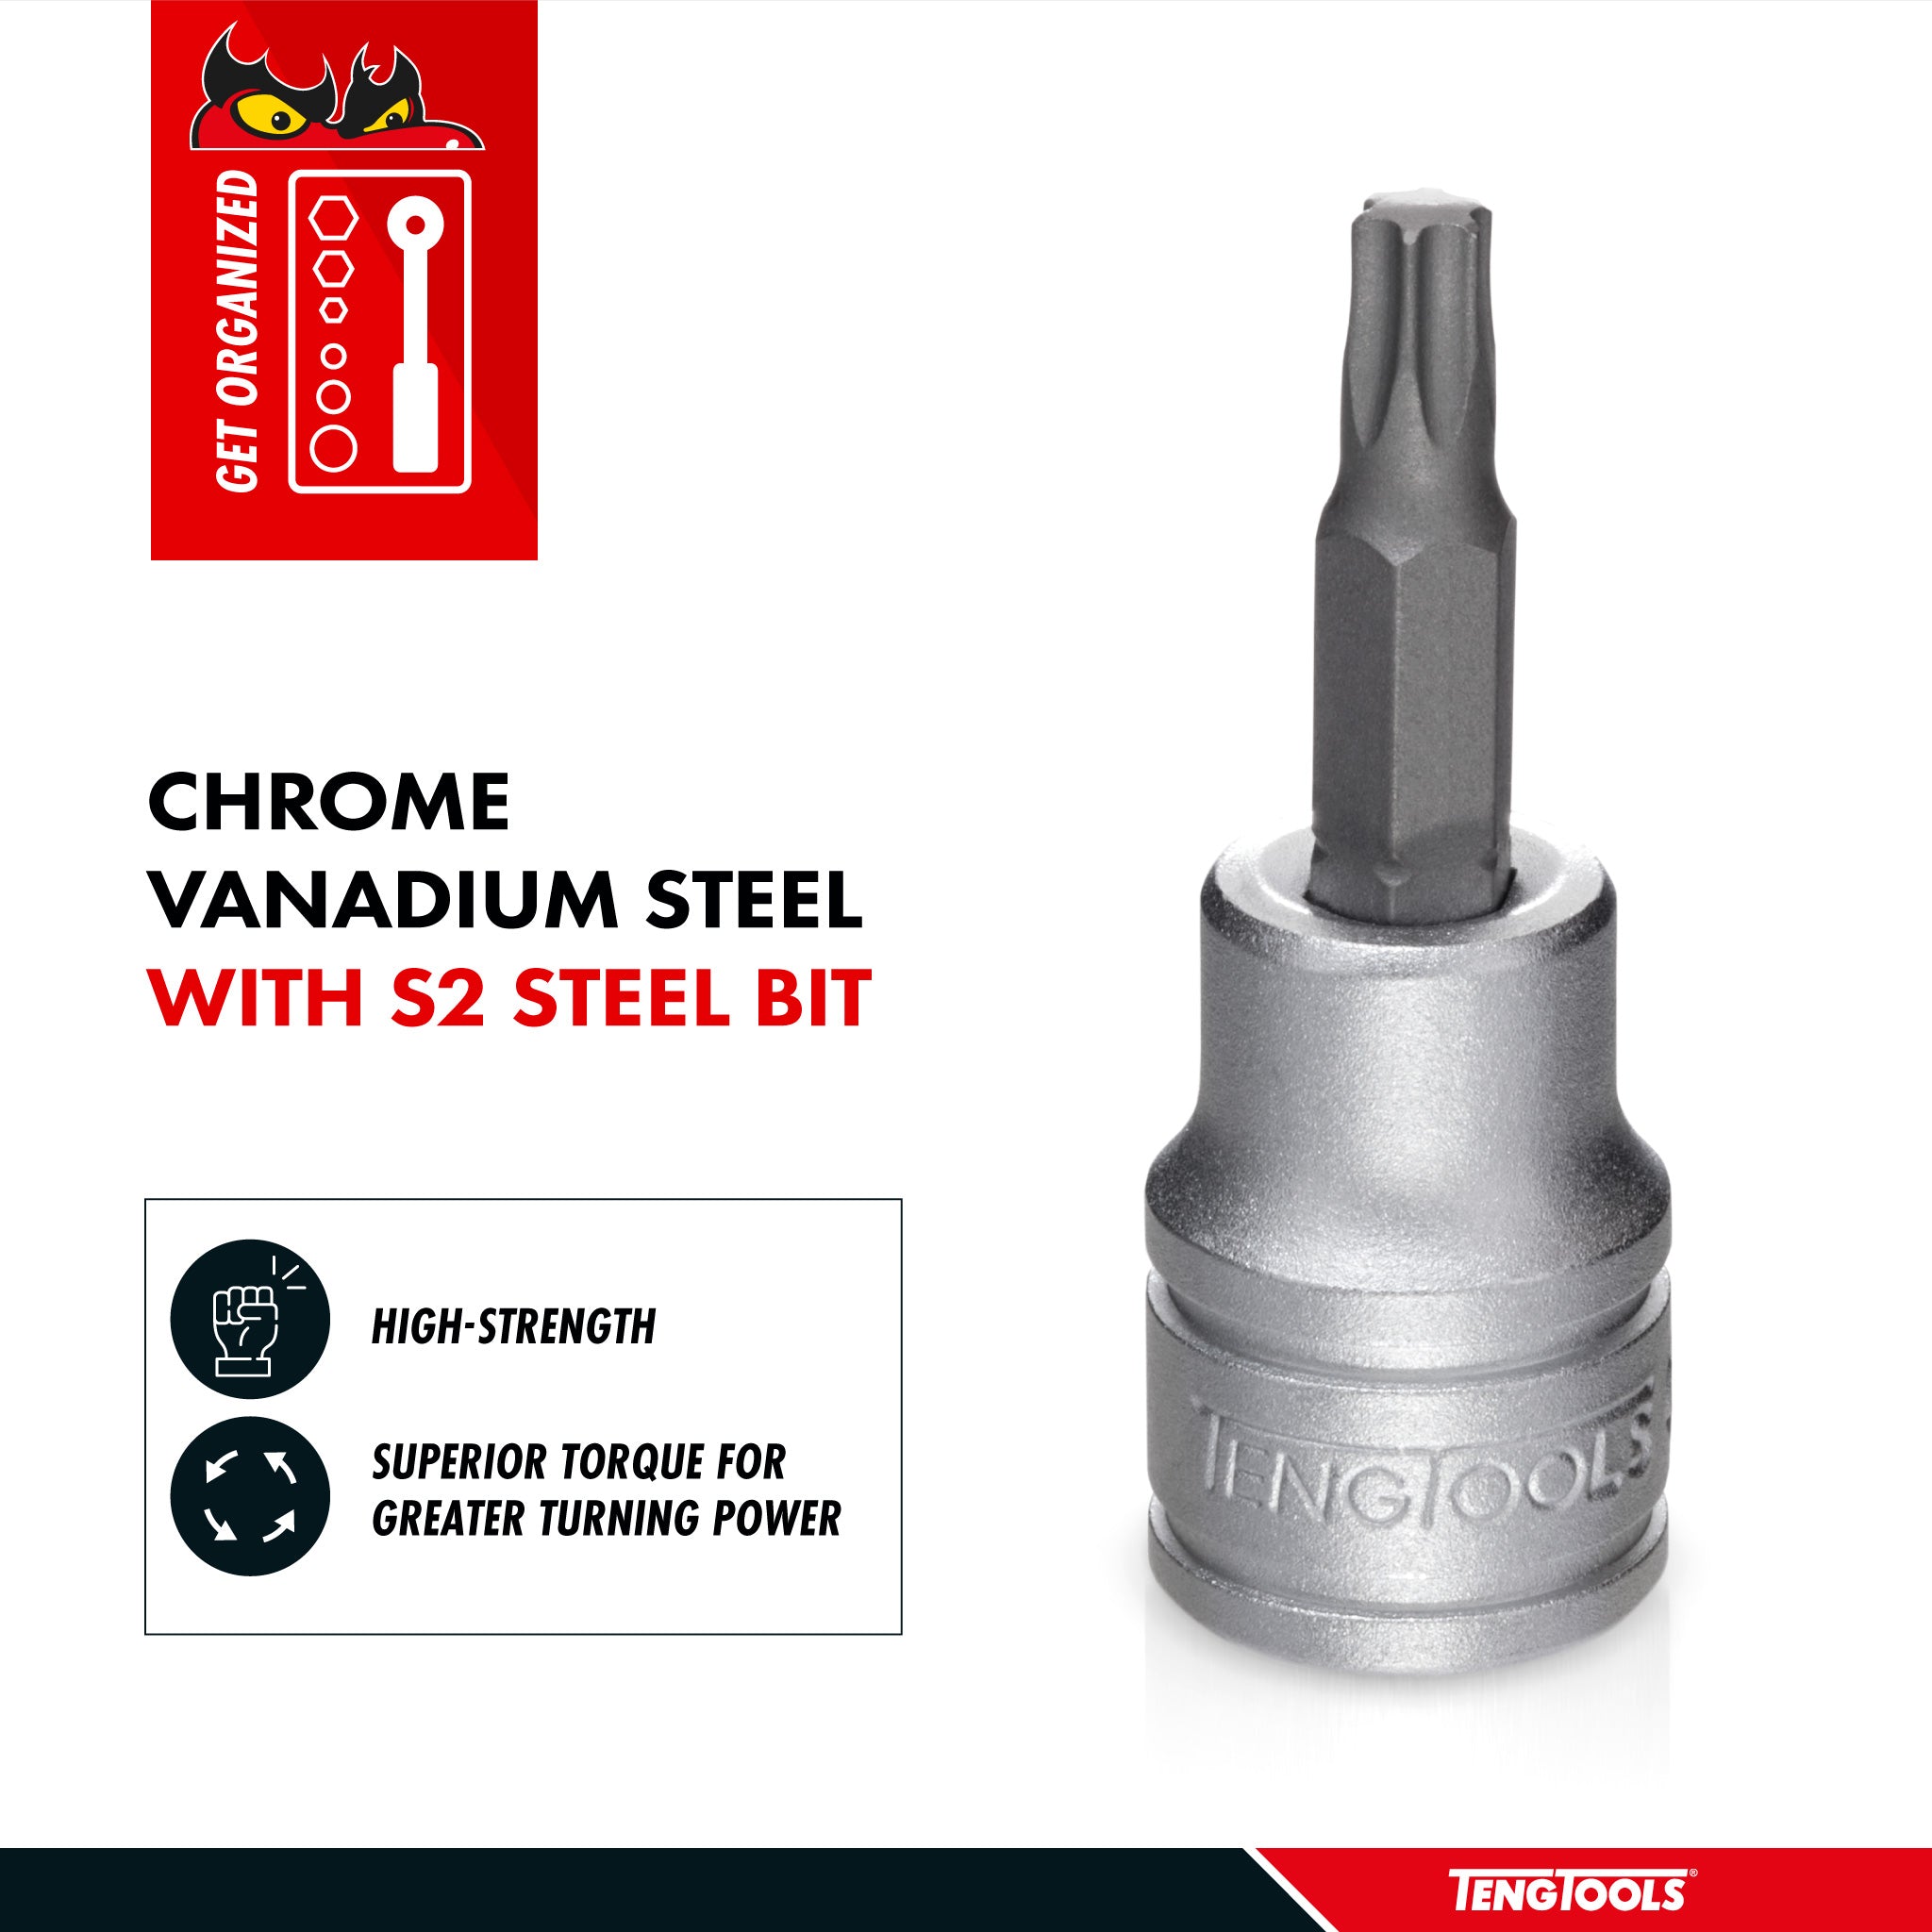 Teng Tools 1/2 Inch Drive Metric Torx TX Chrome Vanadium Sockets - TX45